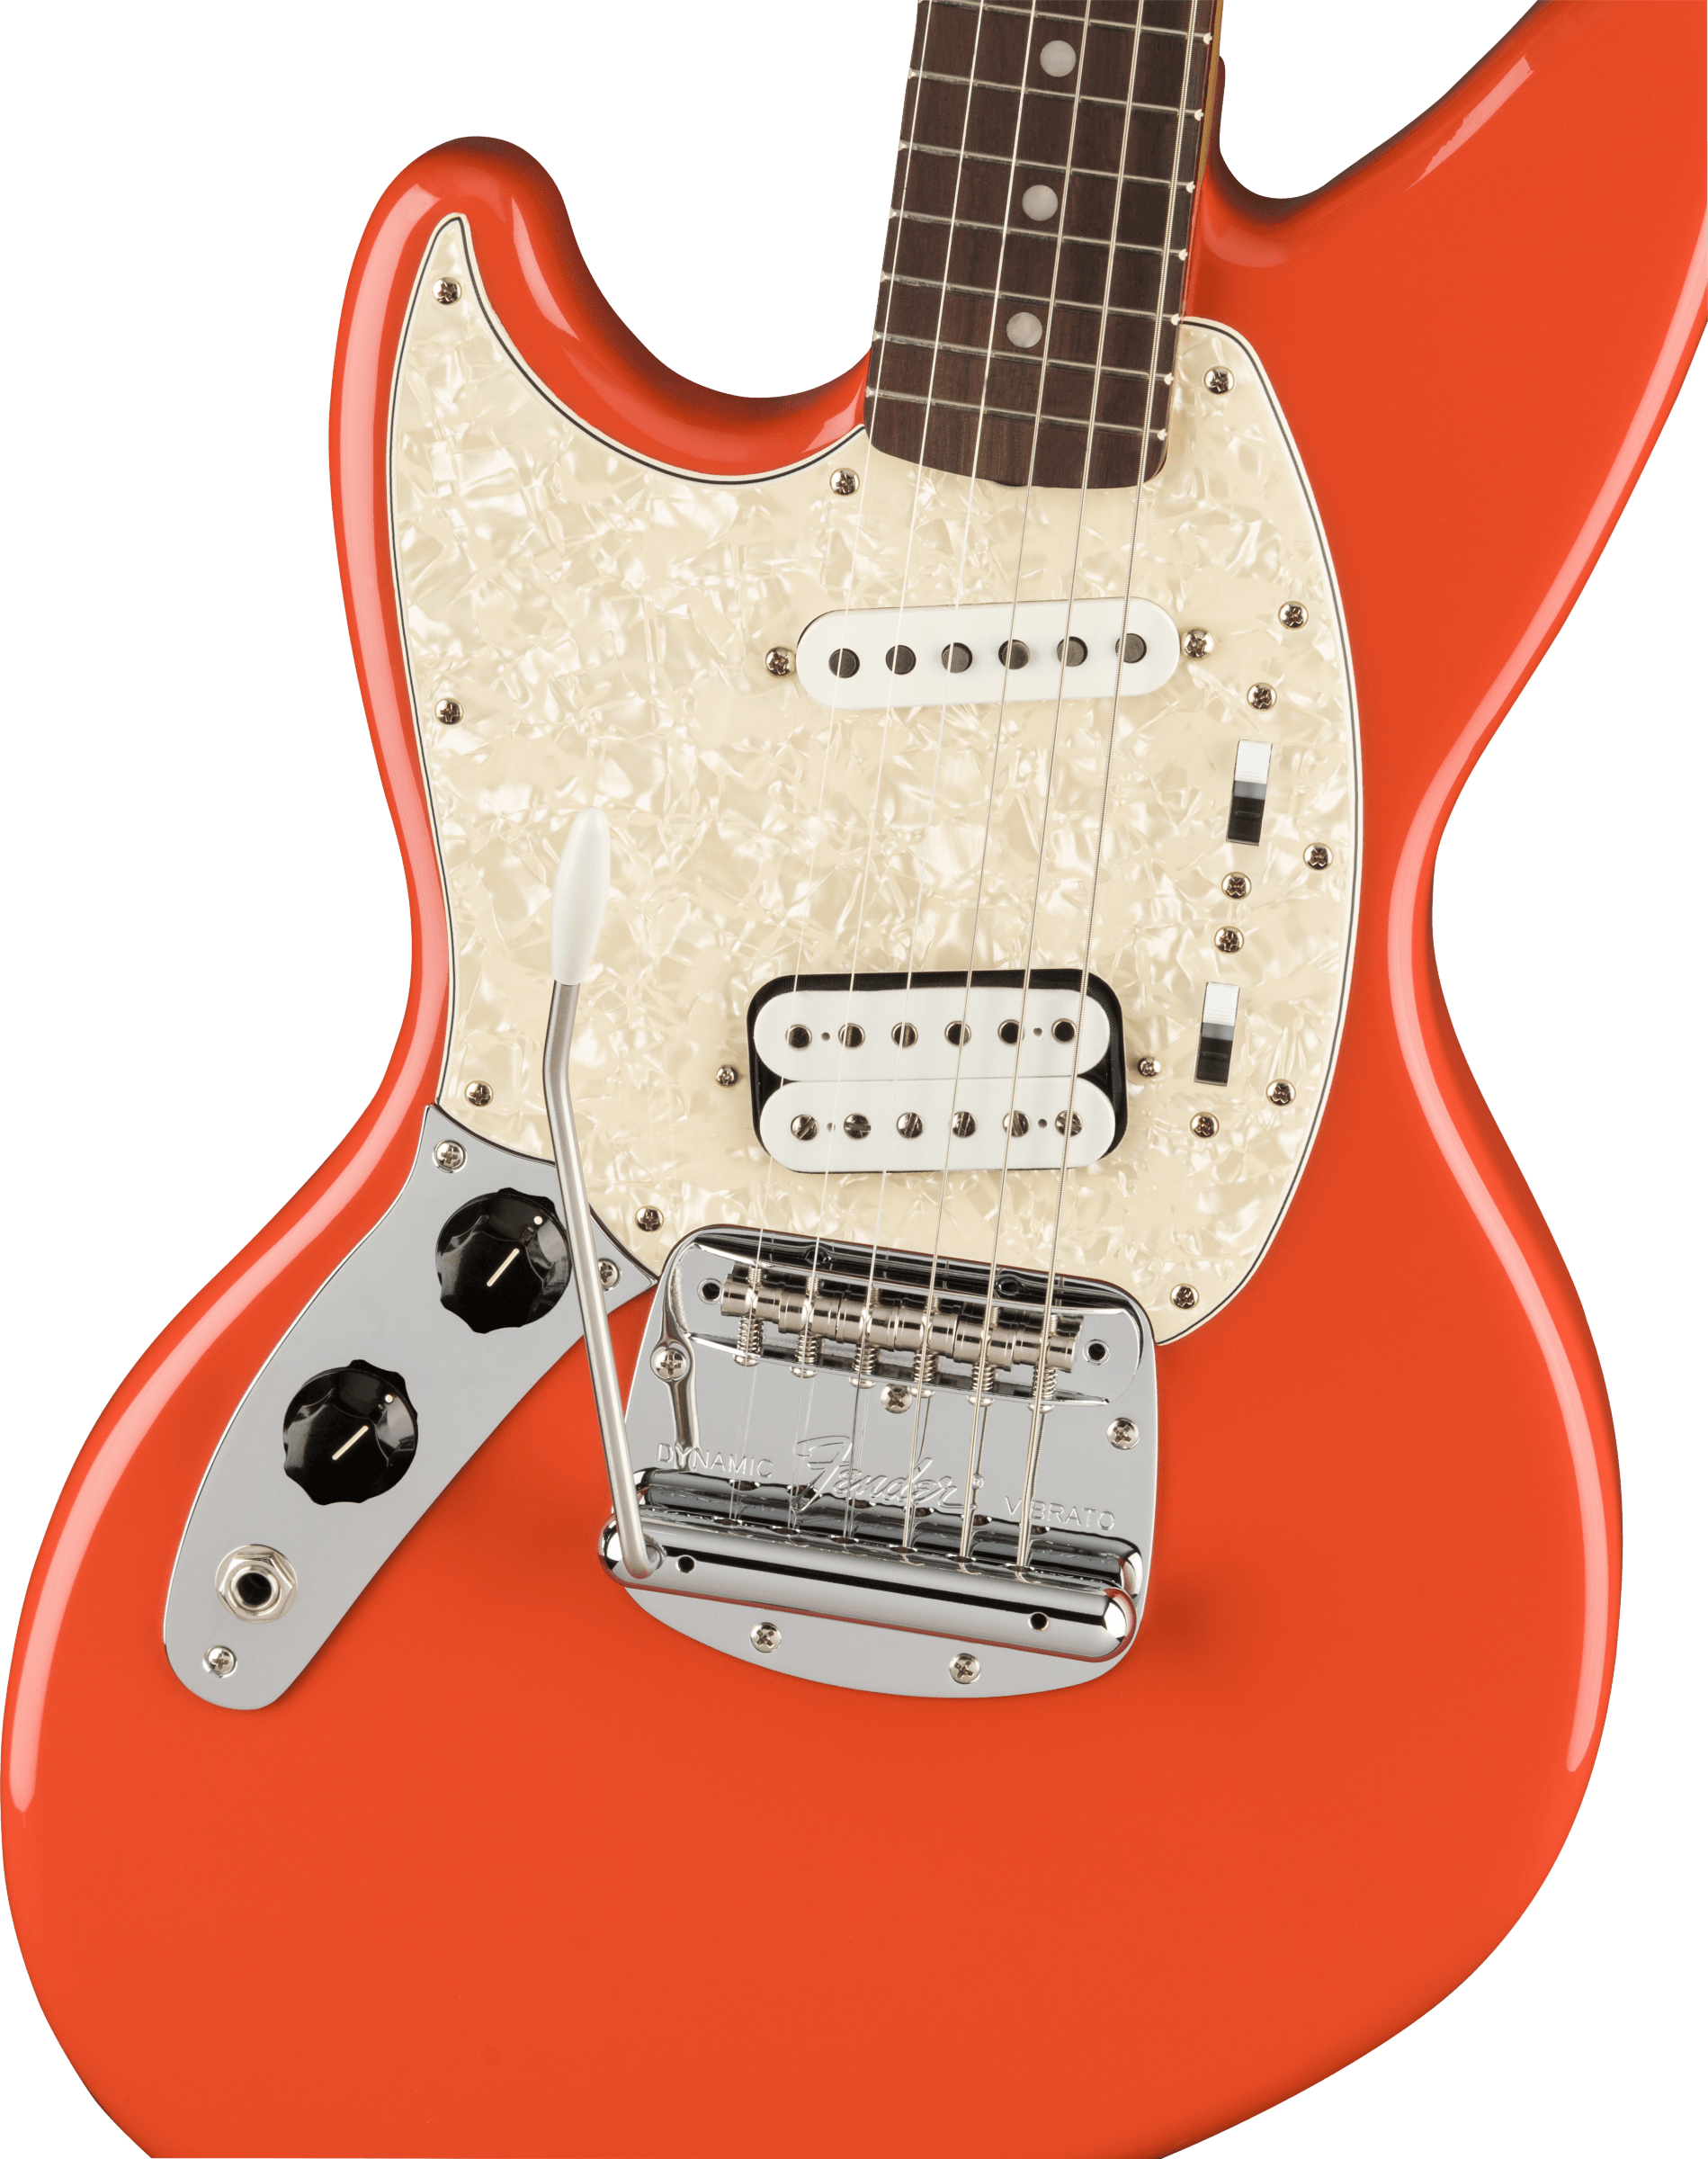 Fender Jag-stang Kurt Cobain Artist Gaucher Hs Trem Rw - Fiesta Red - Linkshandige elektrische gitaar - Variation 2